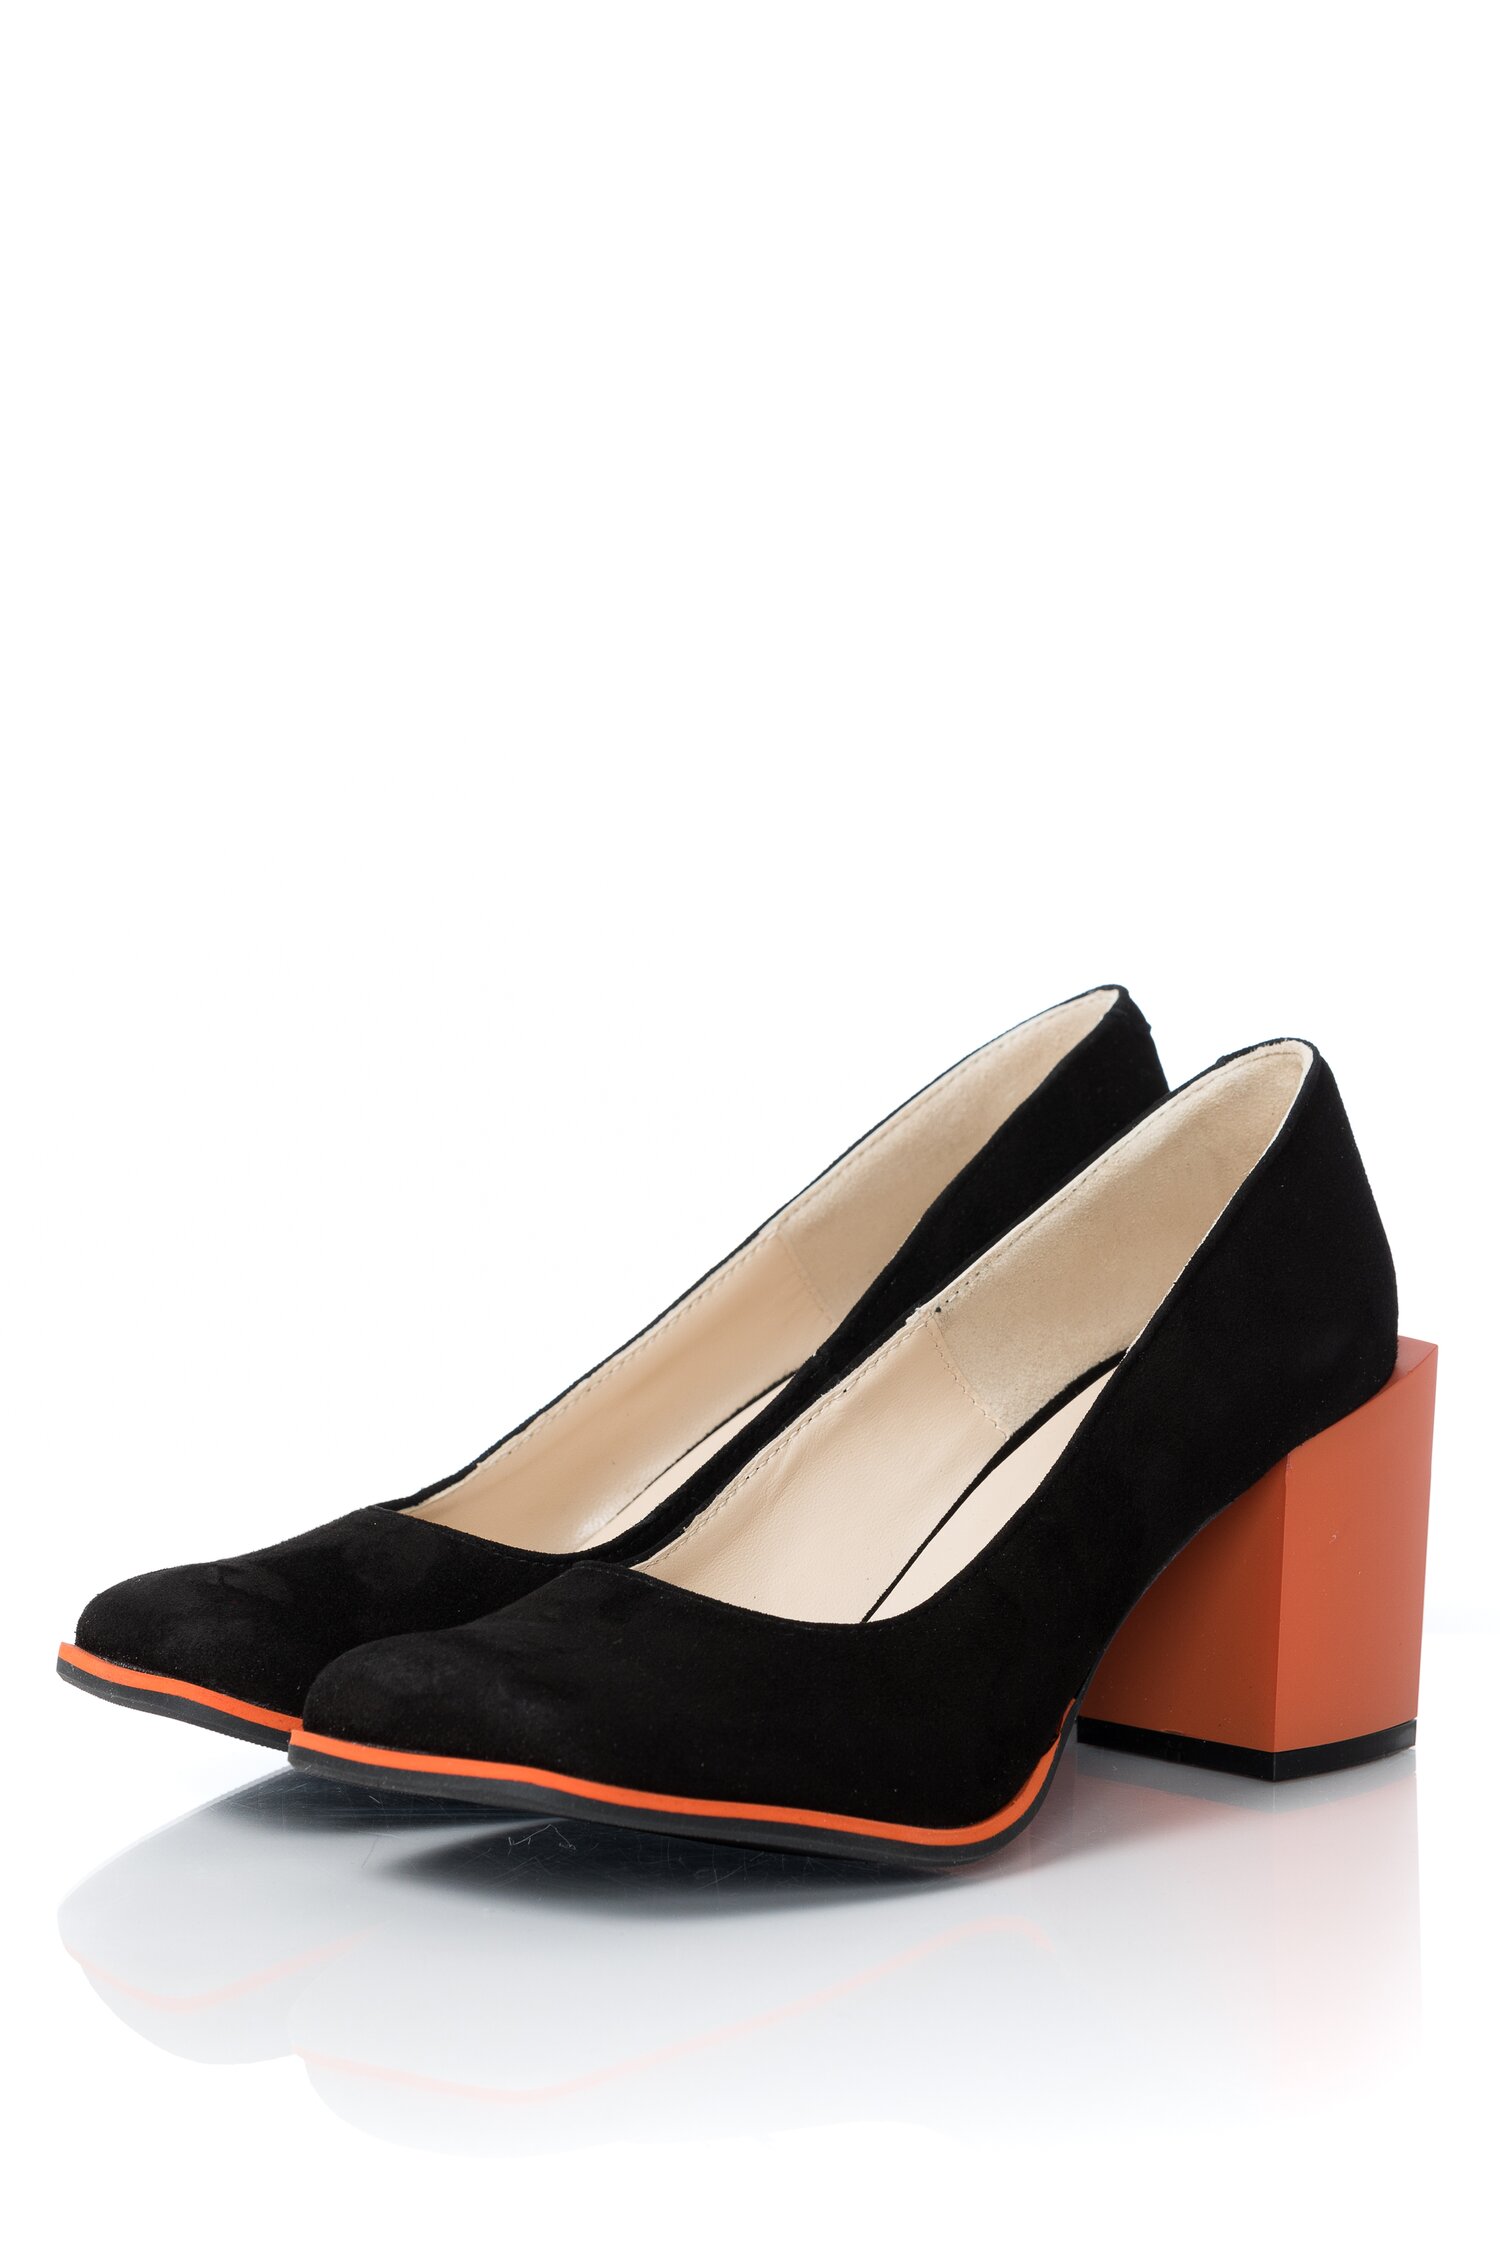 Pantofi Tania negri cu toc portocaliu dyfashion.ro